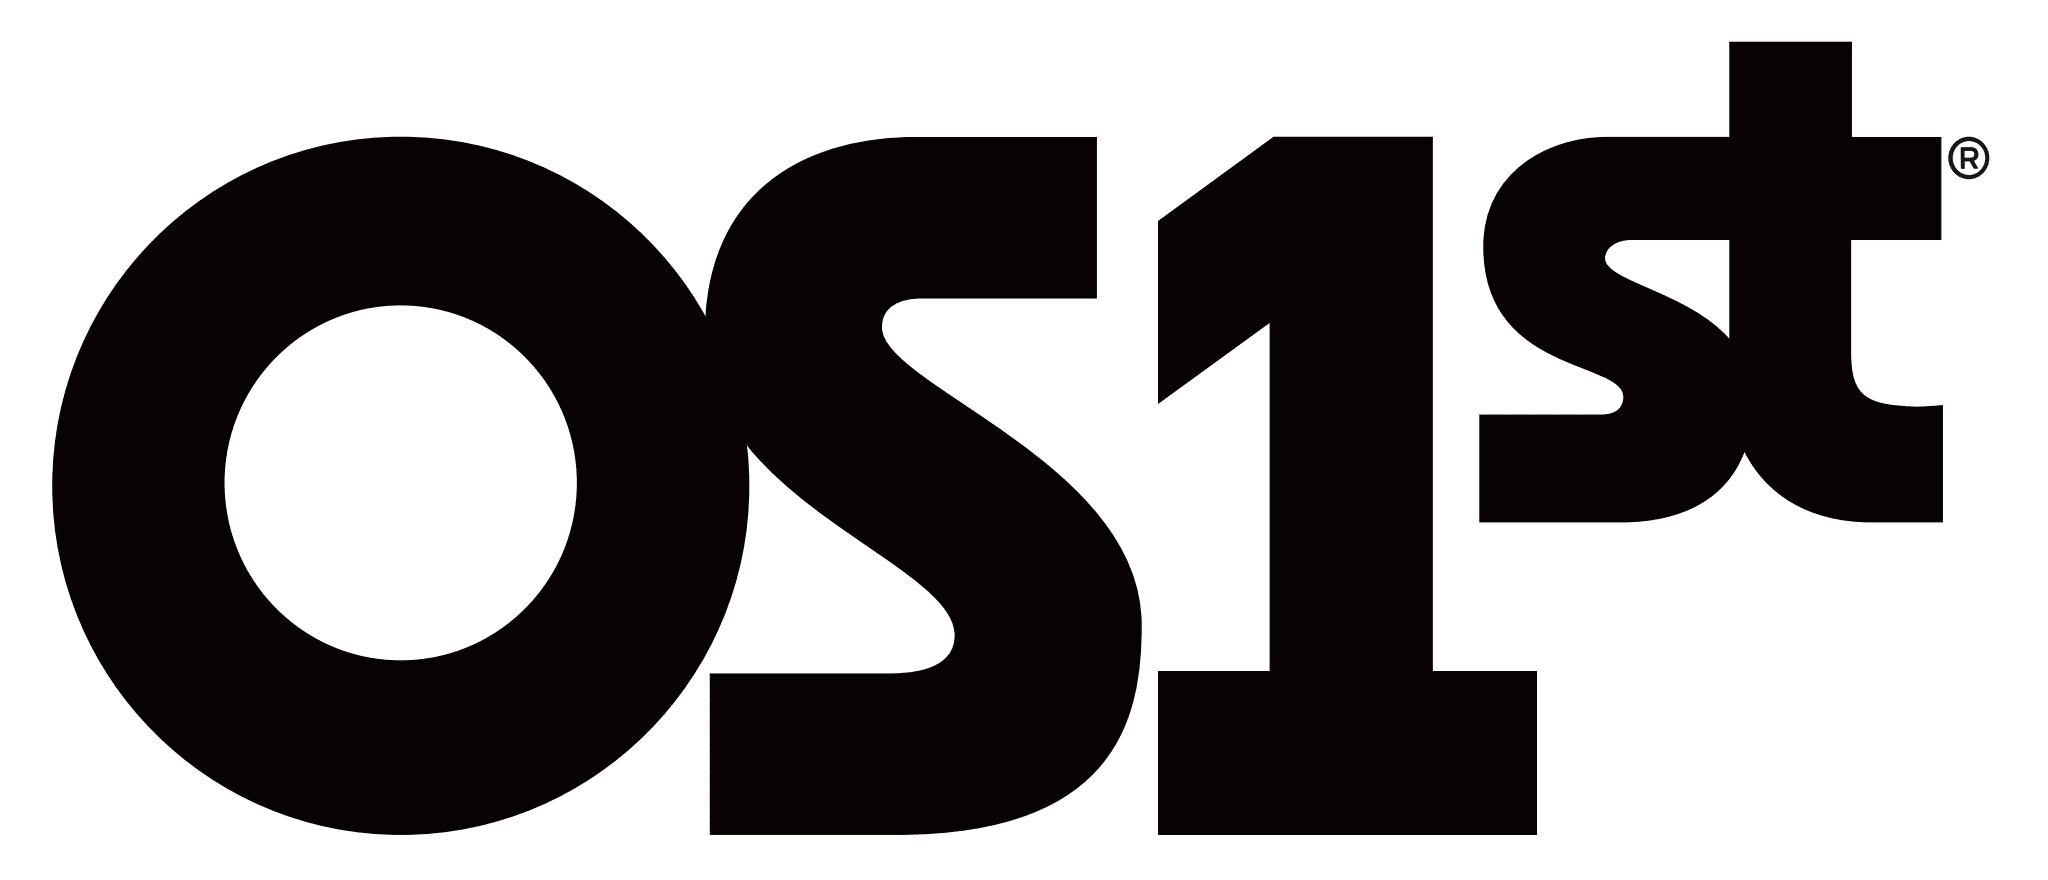 OS1st